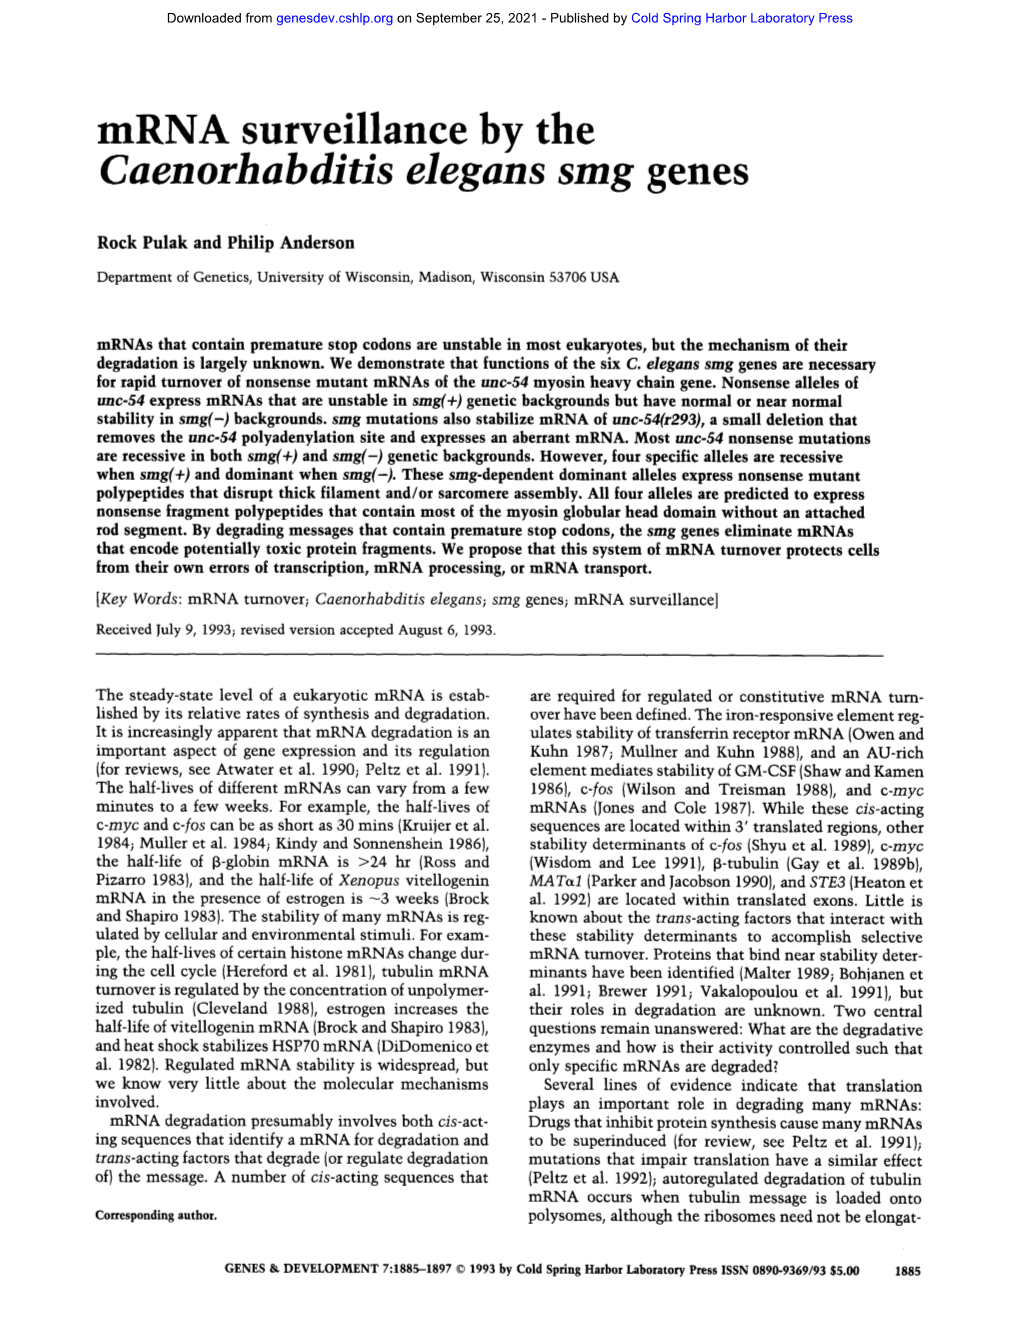 Mrna Surveillance by the Caenorhabditis Elegans Stag Genes